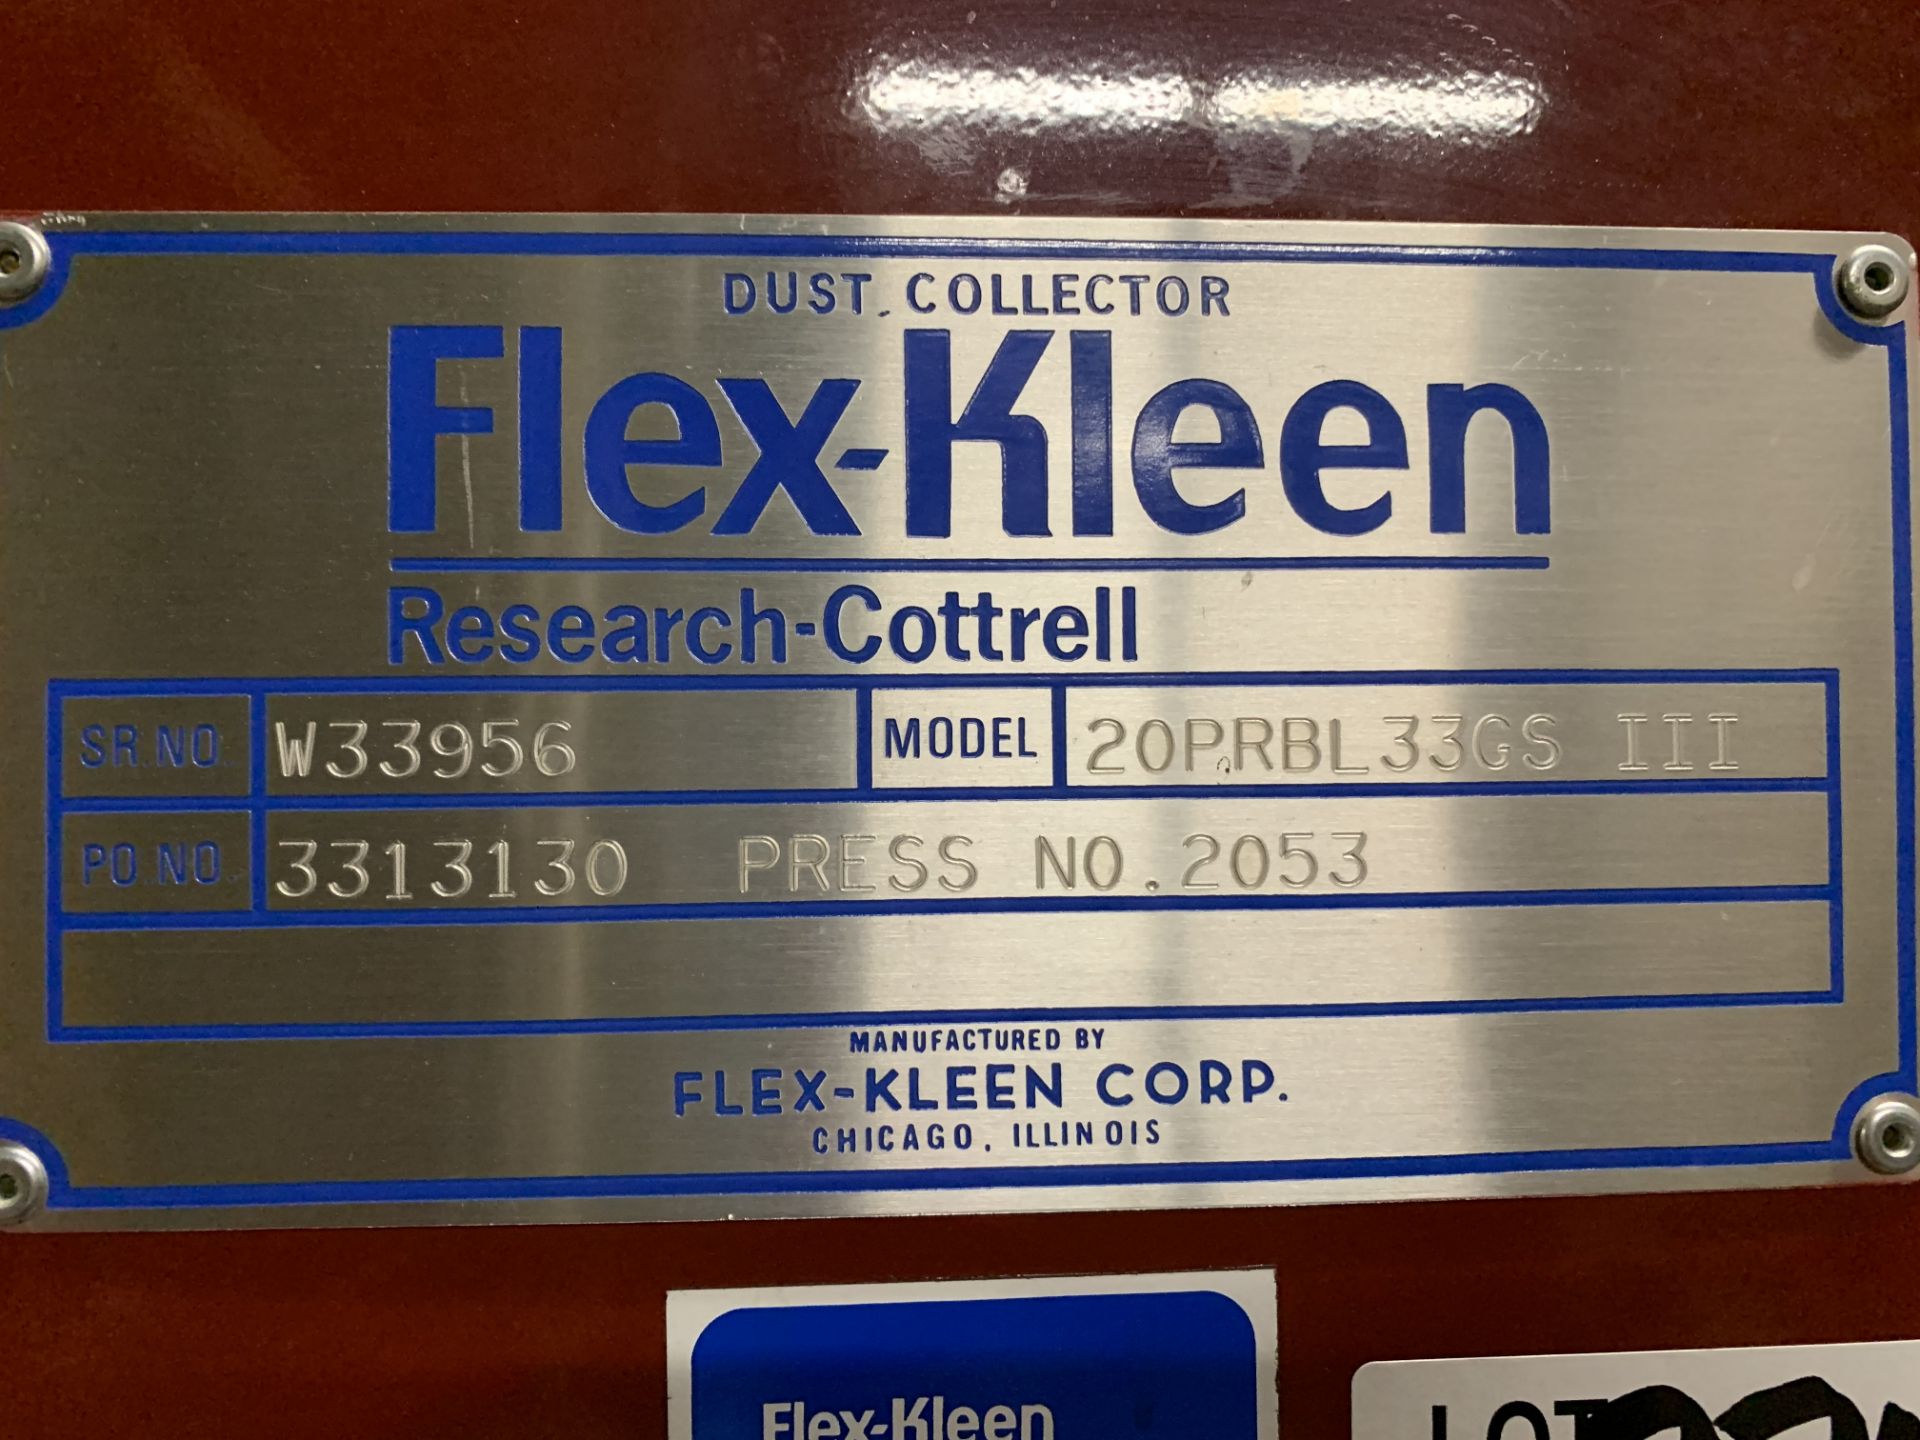 Flex - Kleen model 20PRBL33GS III Industrial Dust Collector s/n W33958 - Image 2 of 3